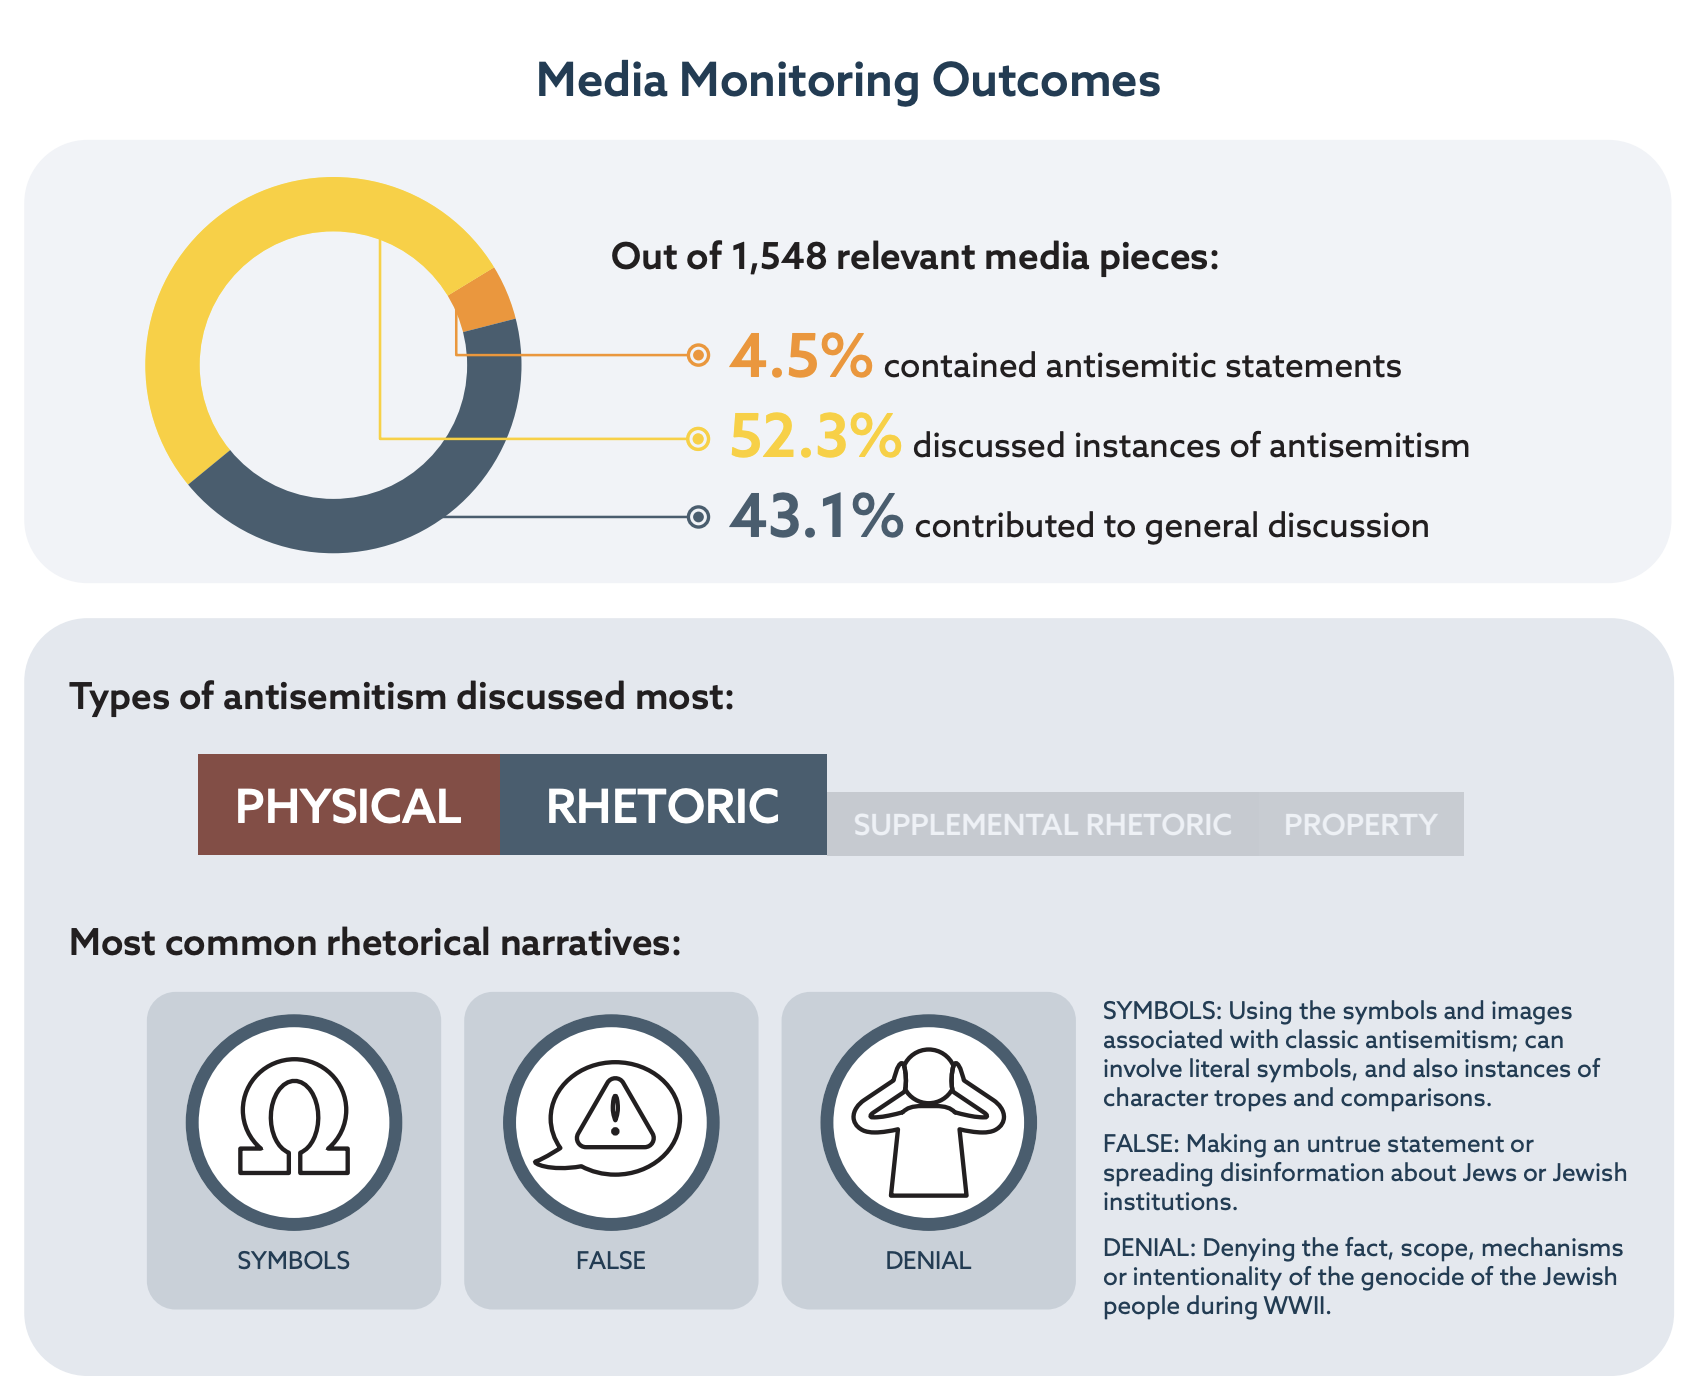 Media monitoring outcomes